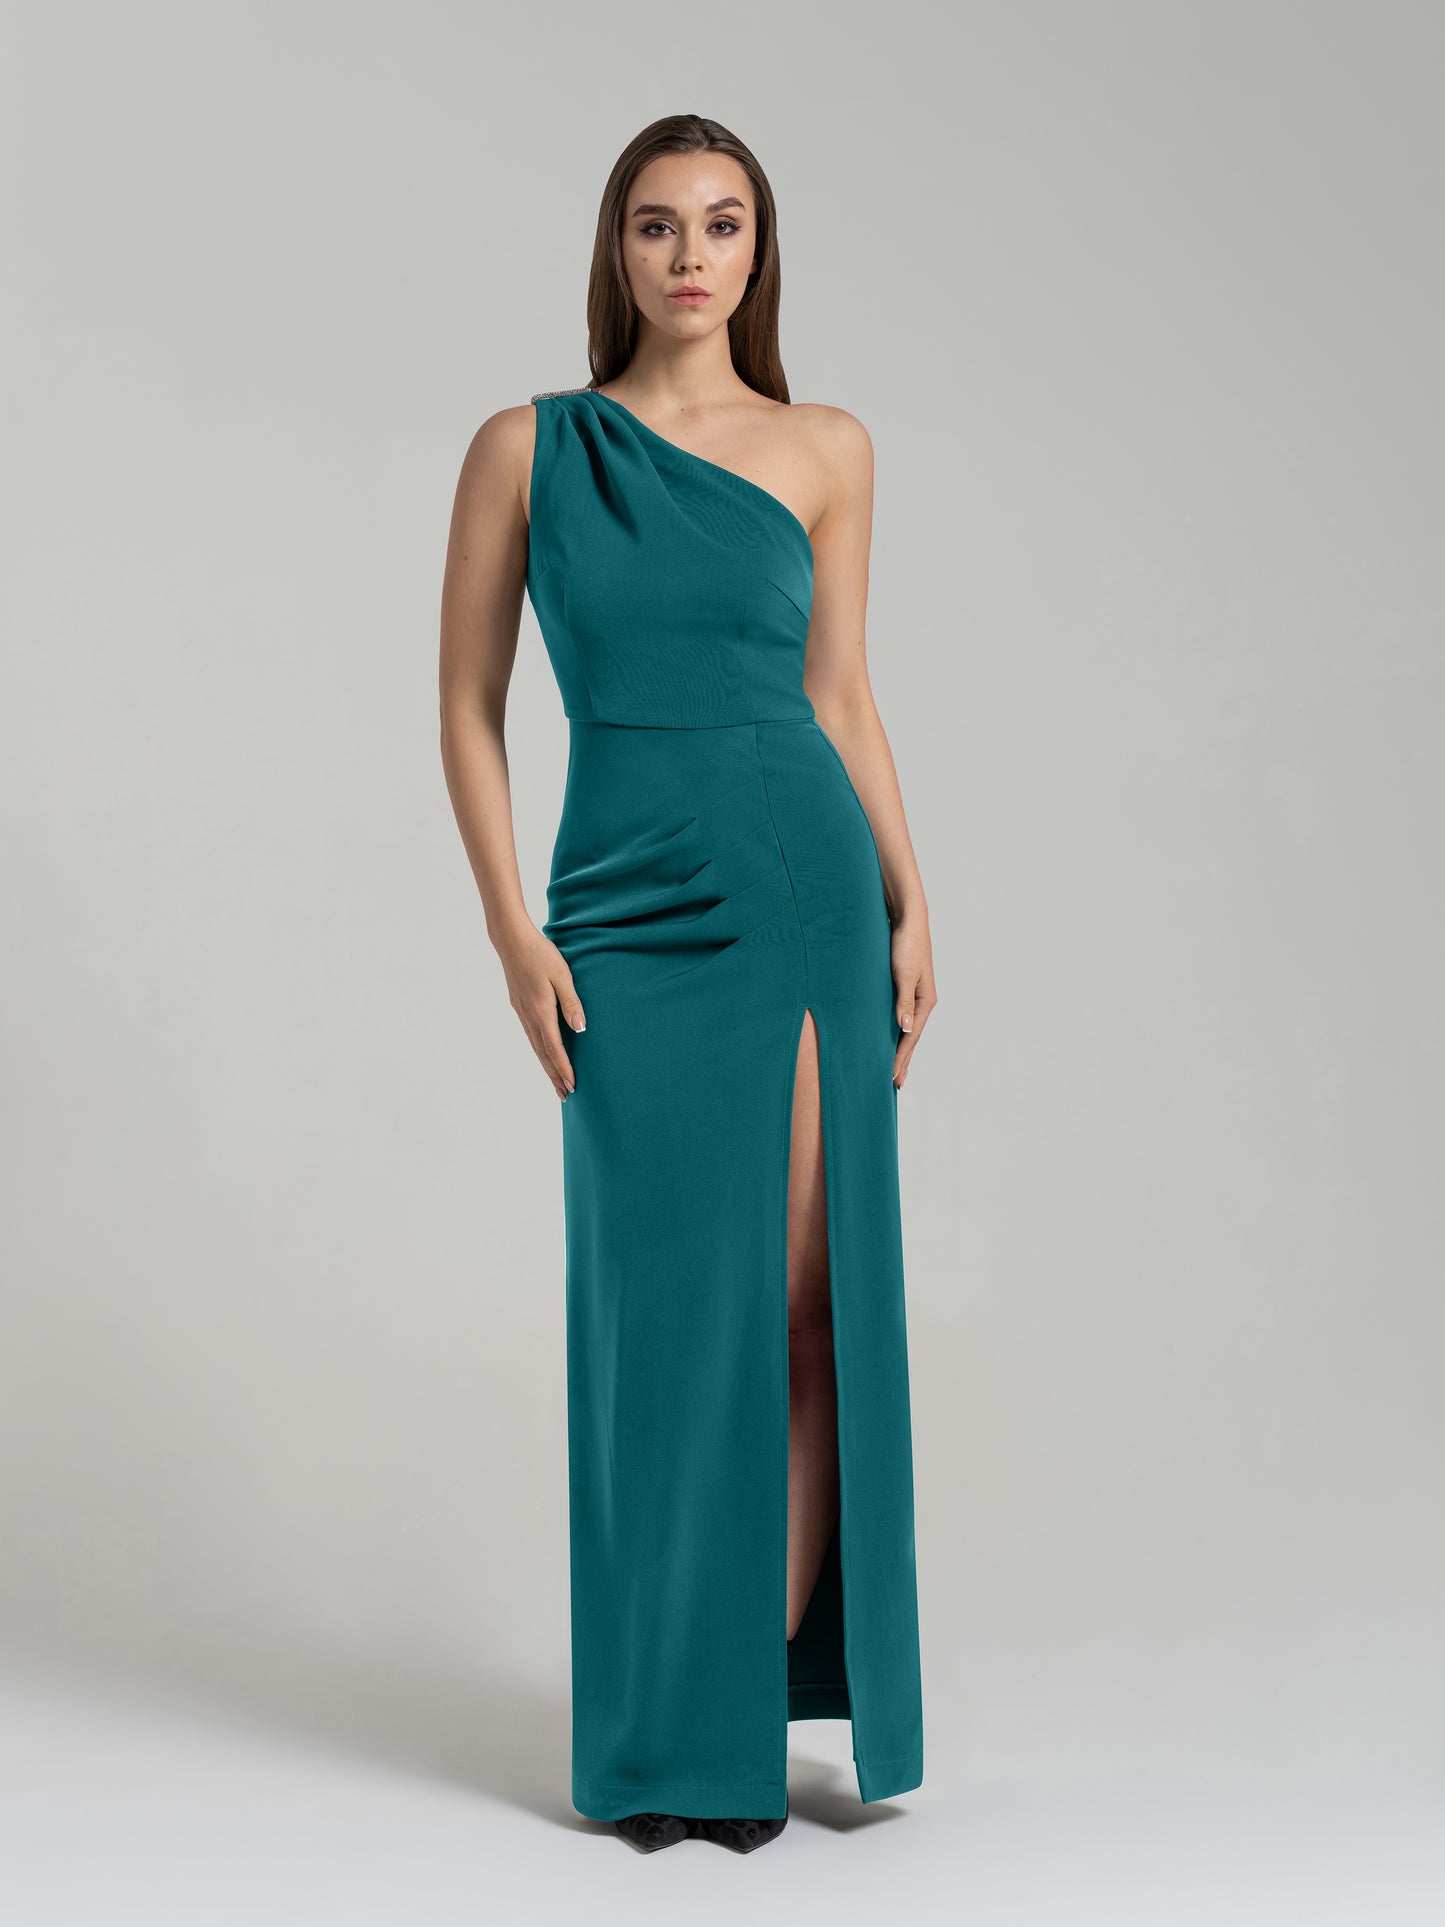 Harmony Asymmetric Long Dress - Turquoise